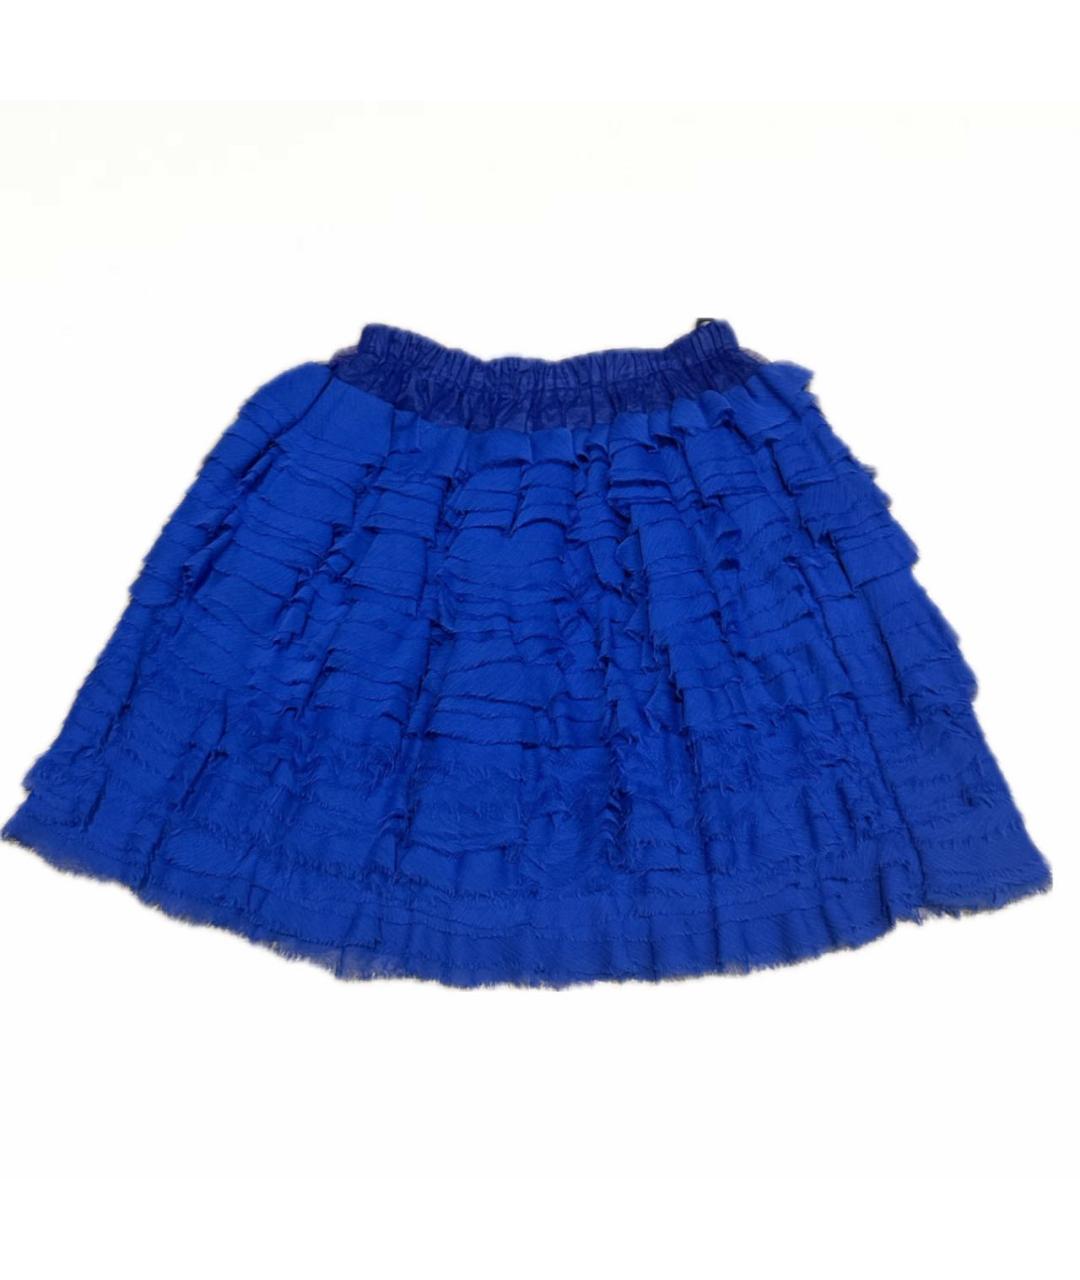 MI MI SOL Синяя полиэстеровая юбка, фото 1